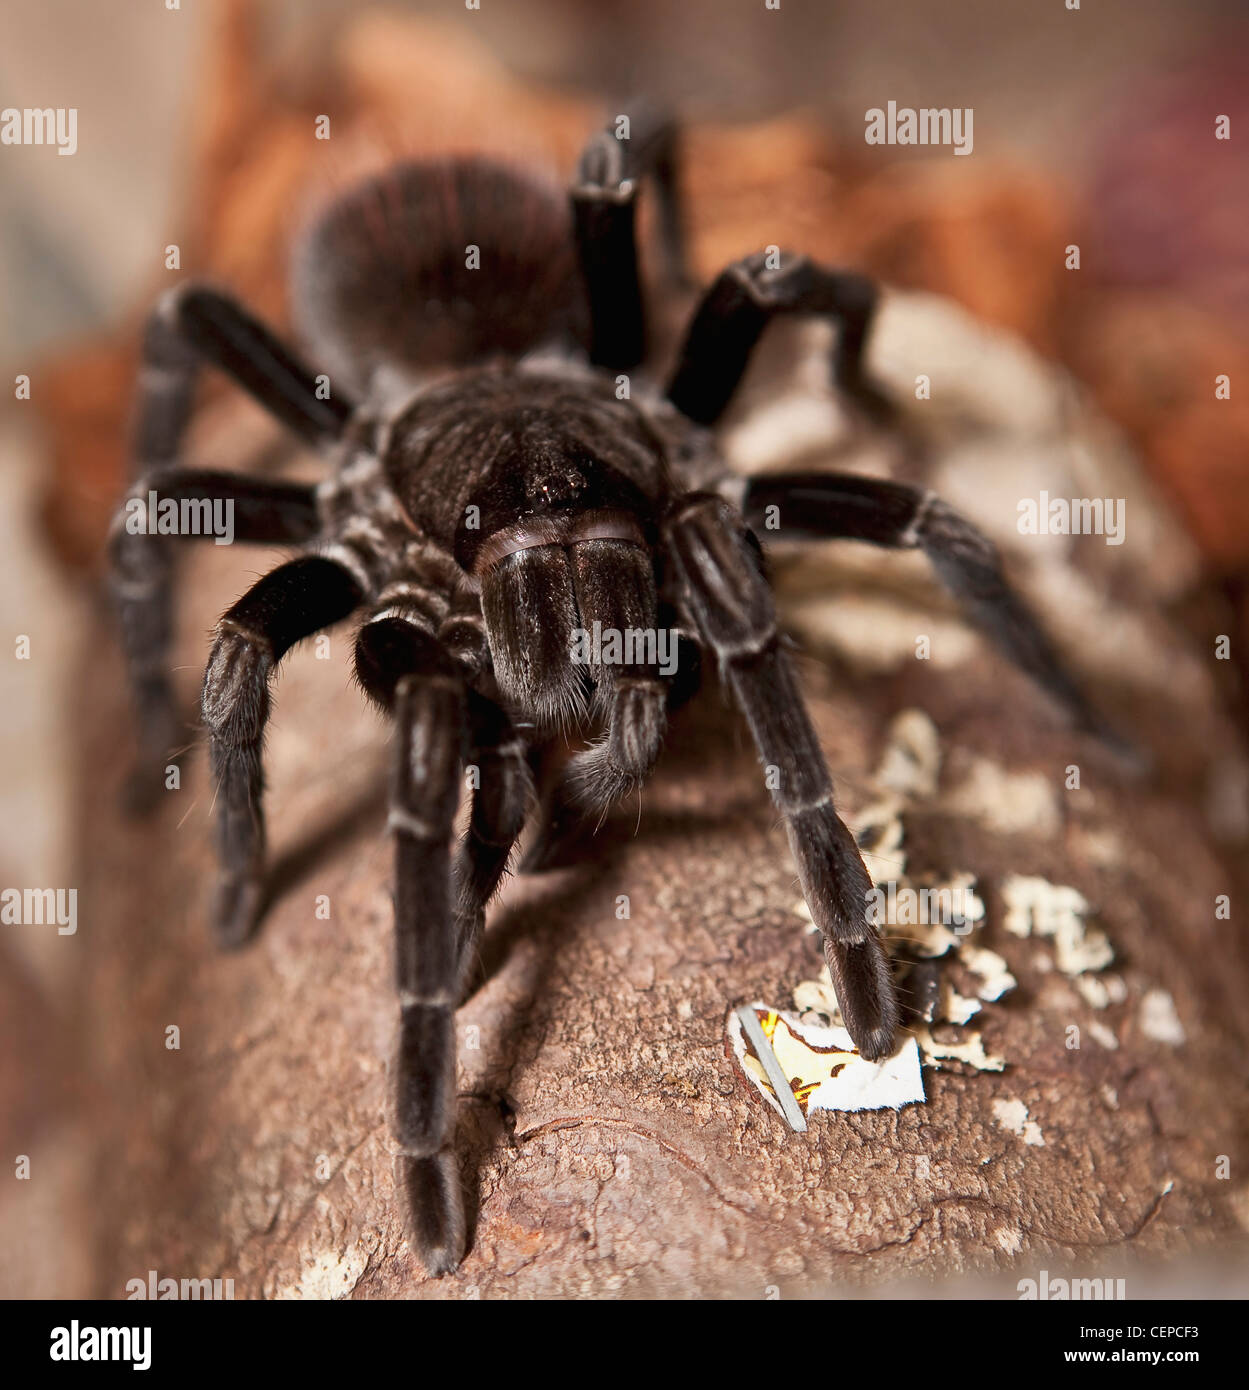 a spider on a log; edmonton, alberta, canada Stock Photo